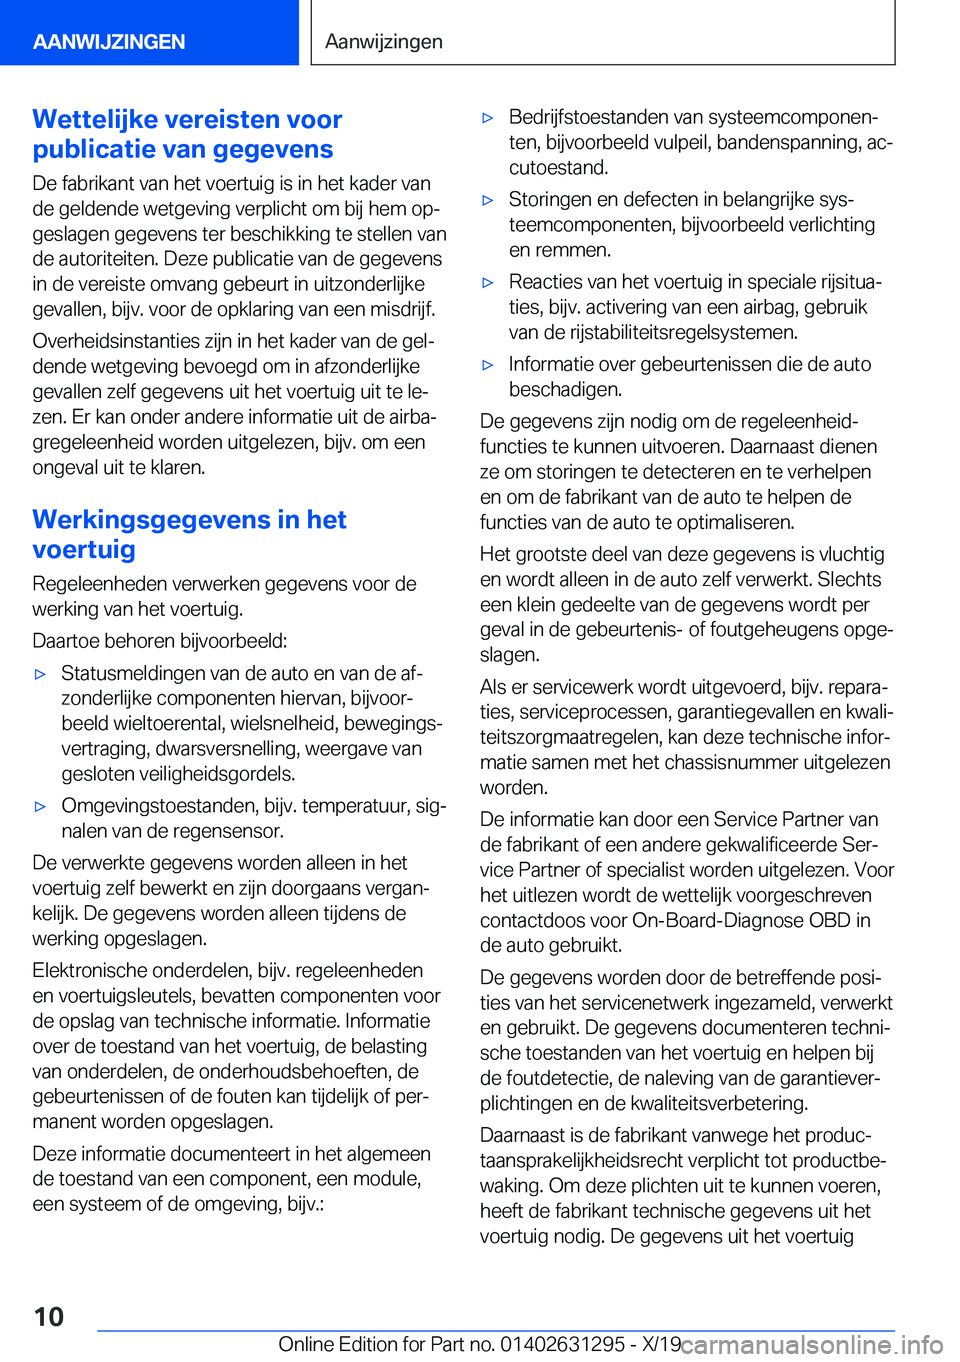 BMW M8 2020  Instructieboekjes (in Dutch) �W�e�t�t�e�l�i�j�k�e��v�e�r�e�i�s�t�e�n��v�o�o�r
�p�u�b�l�i�c�a�t�i�e��v�a�n��g�e�g�e�v�e�n�s
�D�e��f�a�b�r�i�k�a�n�t��v�a�n��h�e�t��v�o�e�r�t�u�i�g��i�s��i�n��h�e�t��k�a�d�e�r��v�a�n
�d�